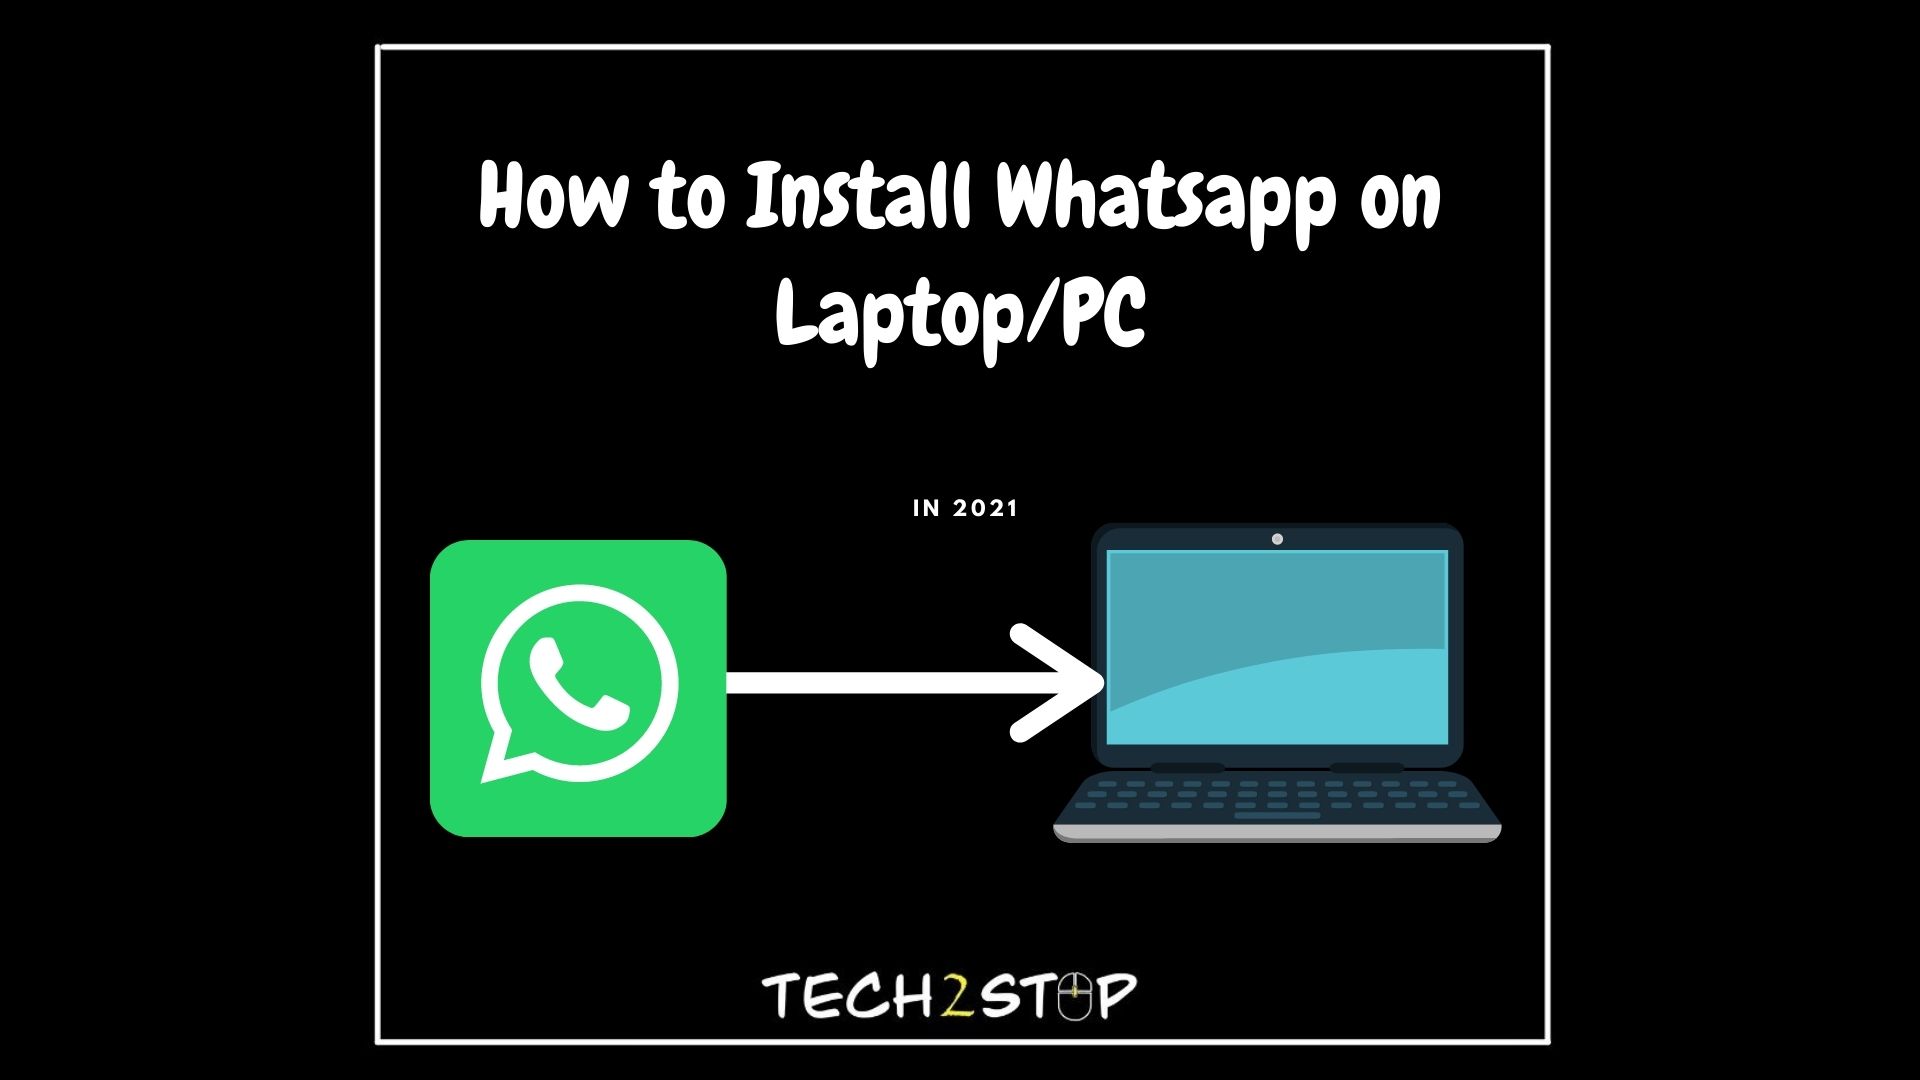 whatsapp laptop windows 8.1 free download